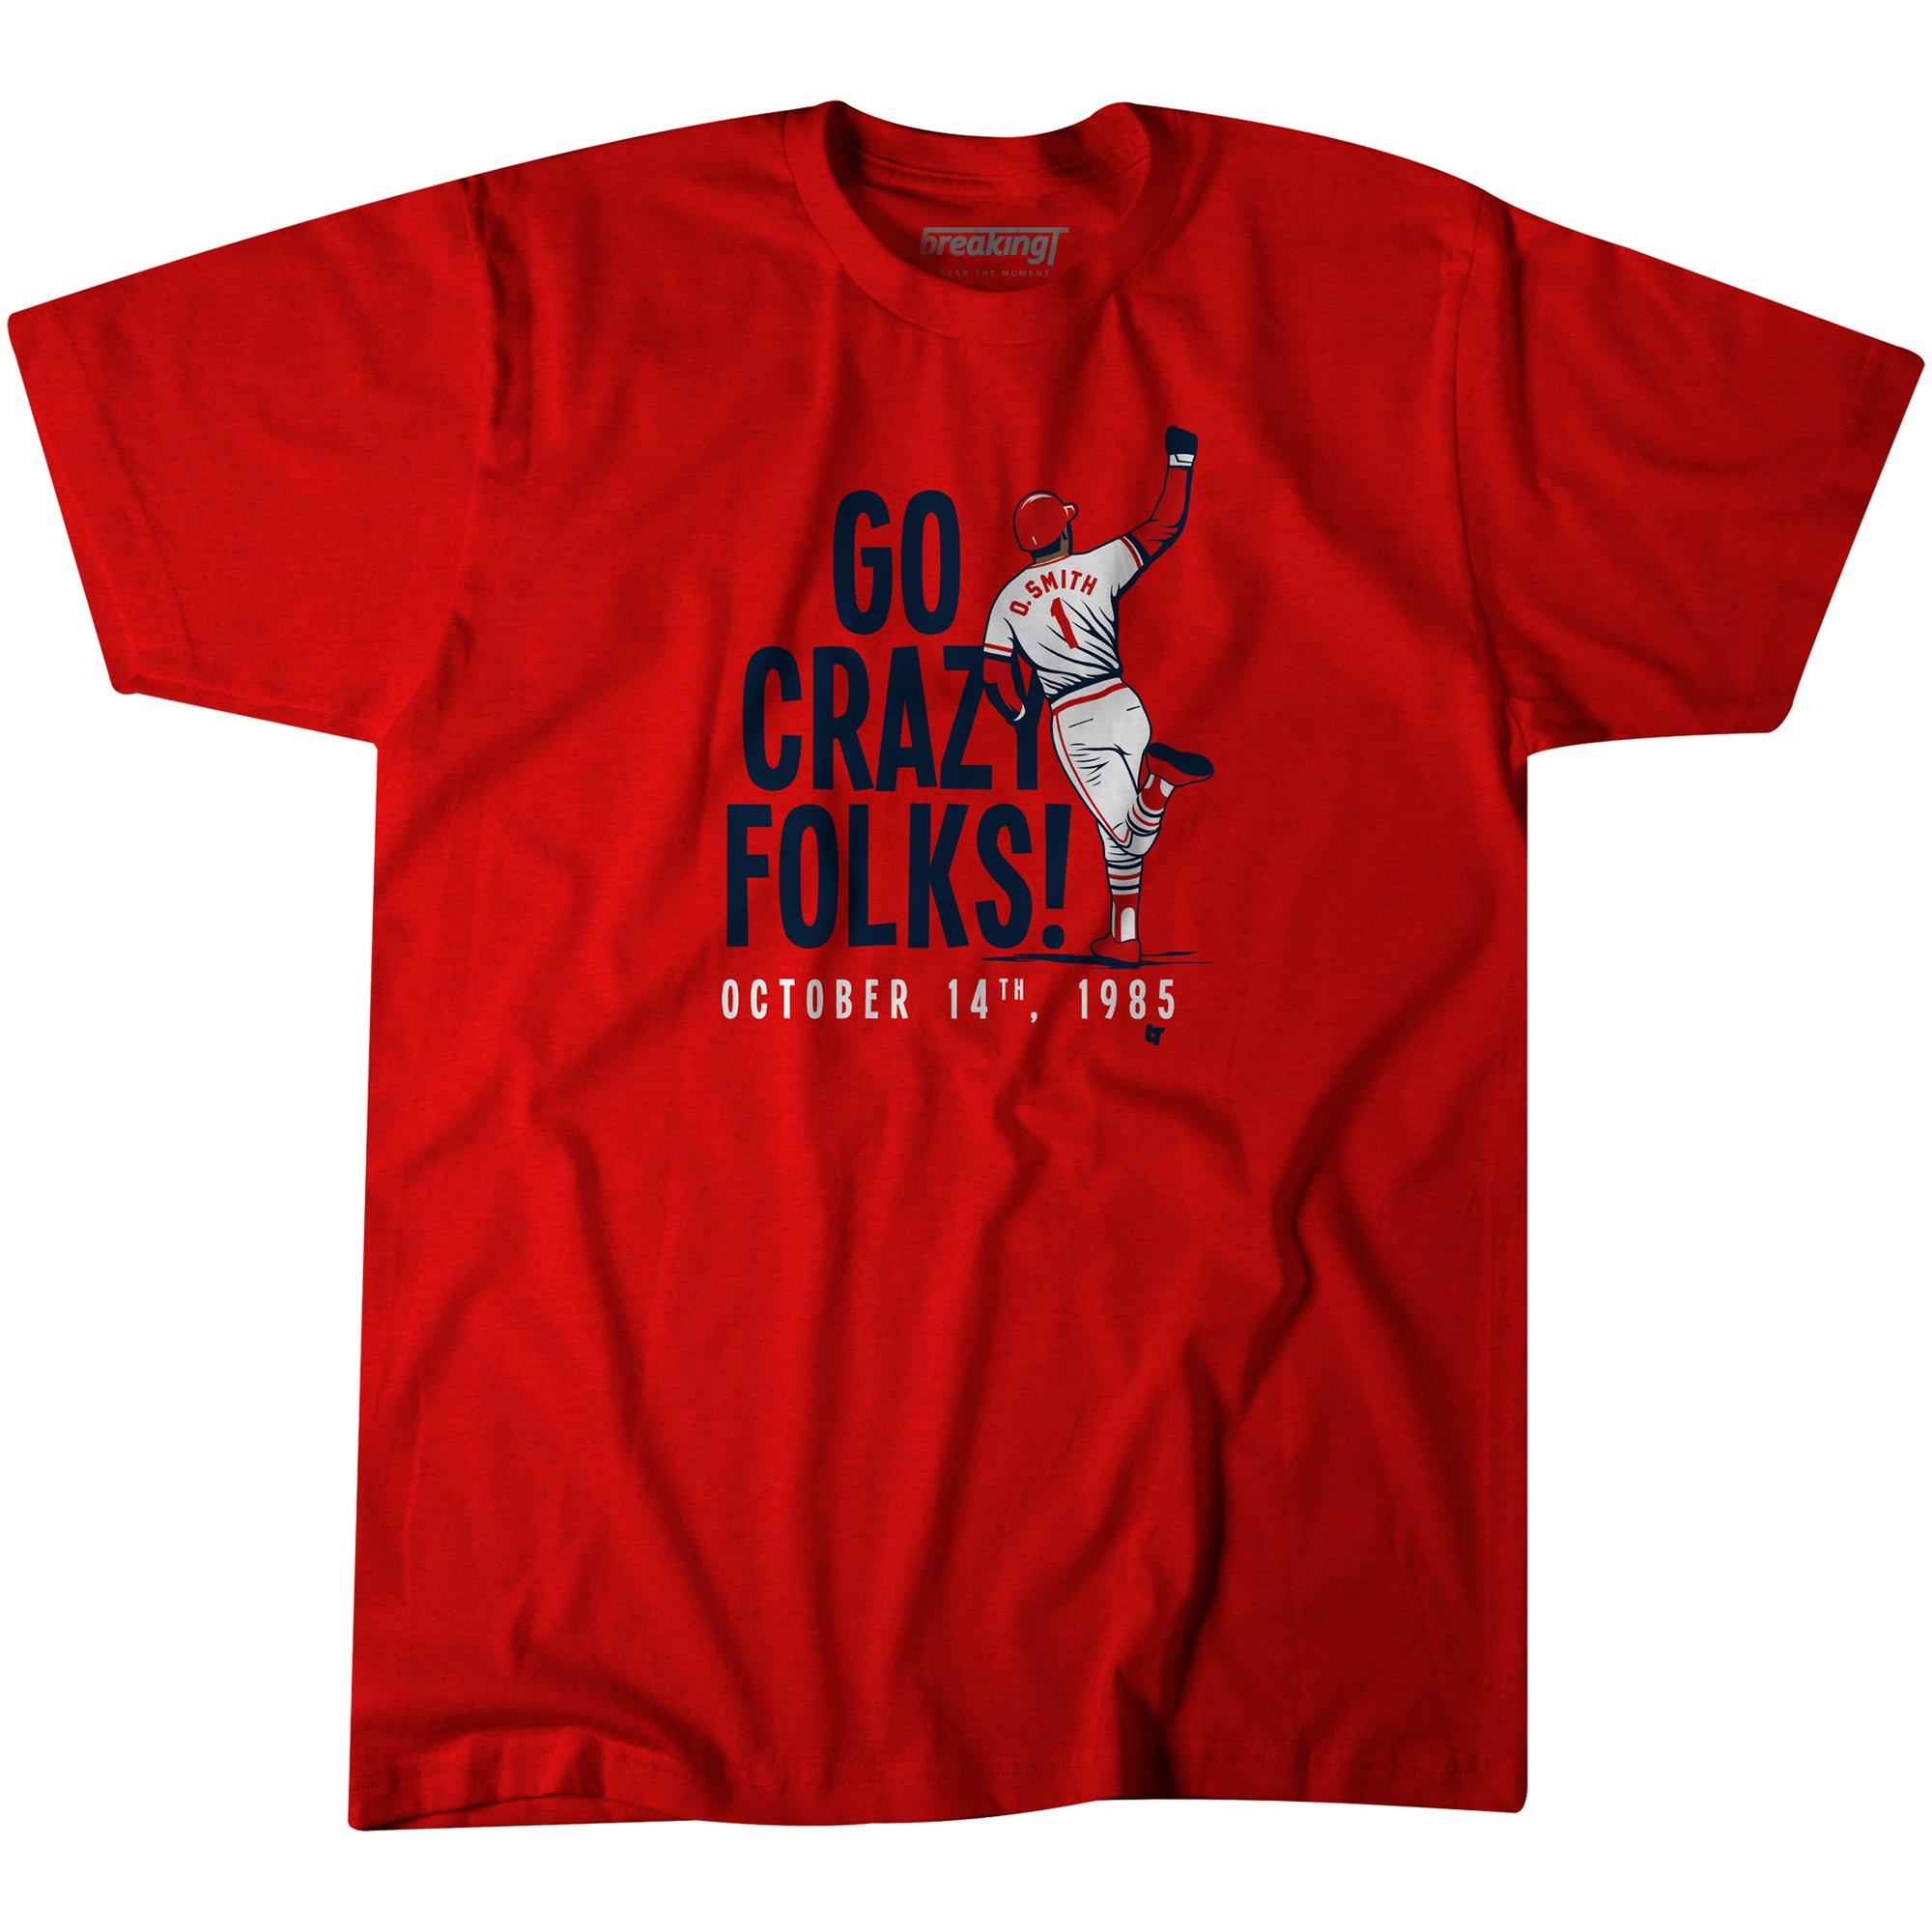 St. Louis Cardinals Purple MLB Crocs Clog Shoes - T-shirts Low Price